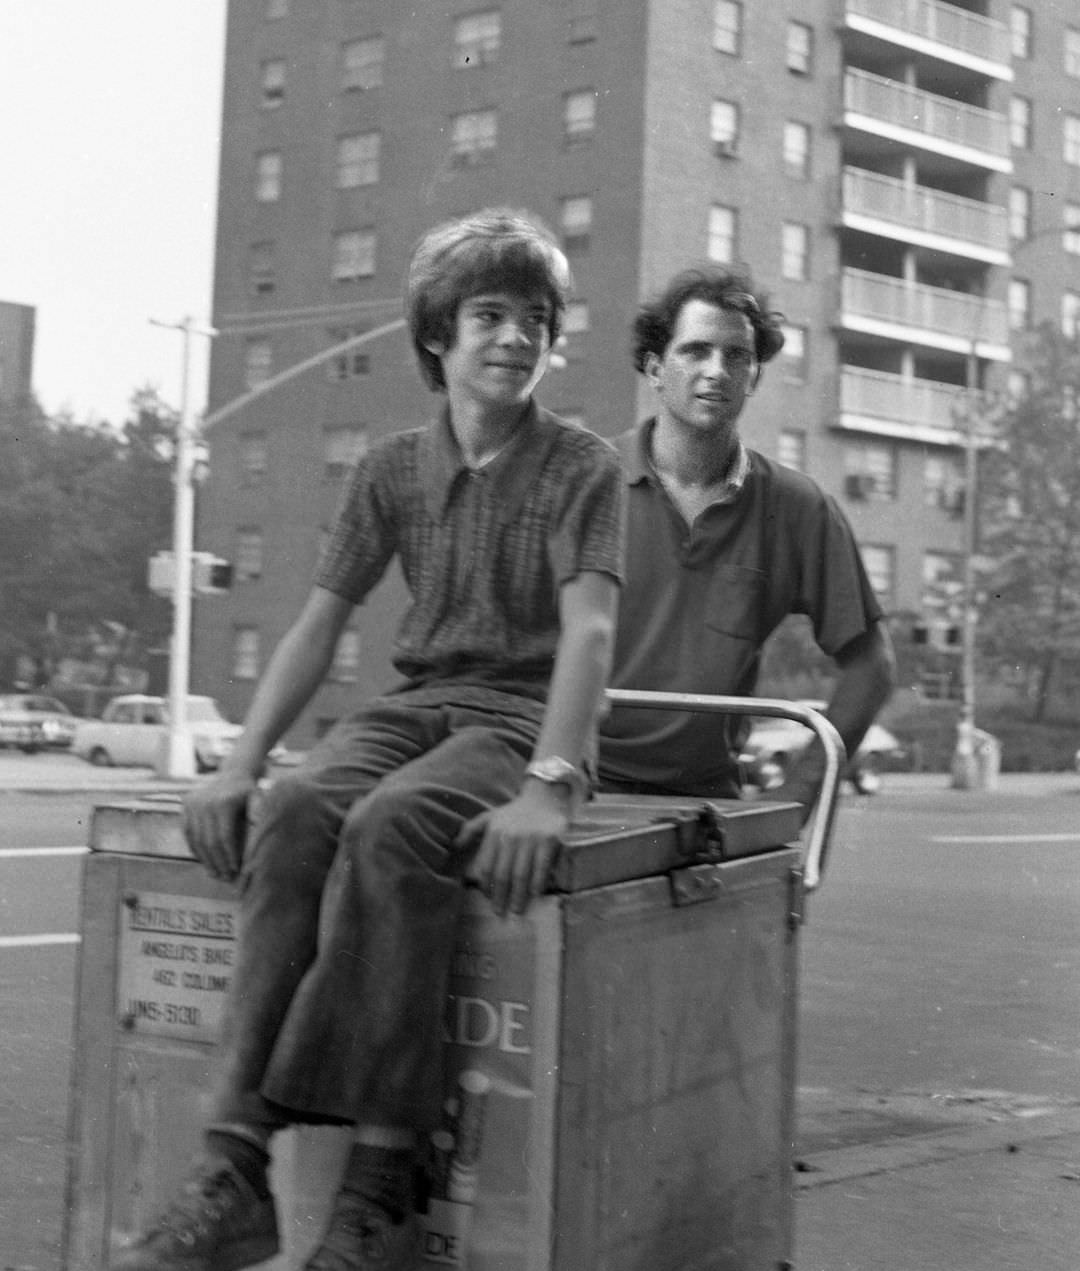 Fernando And Rich On A Cart Bike, 1975.